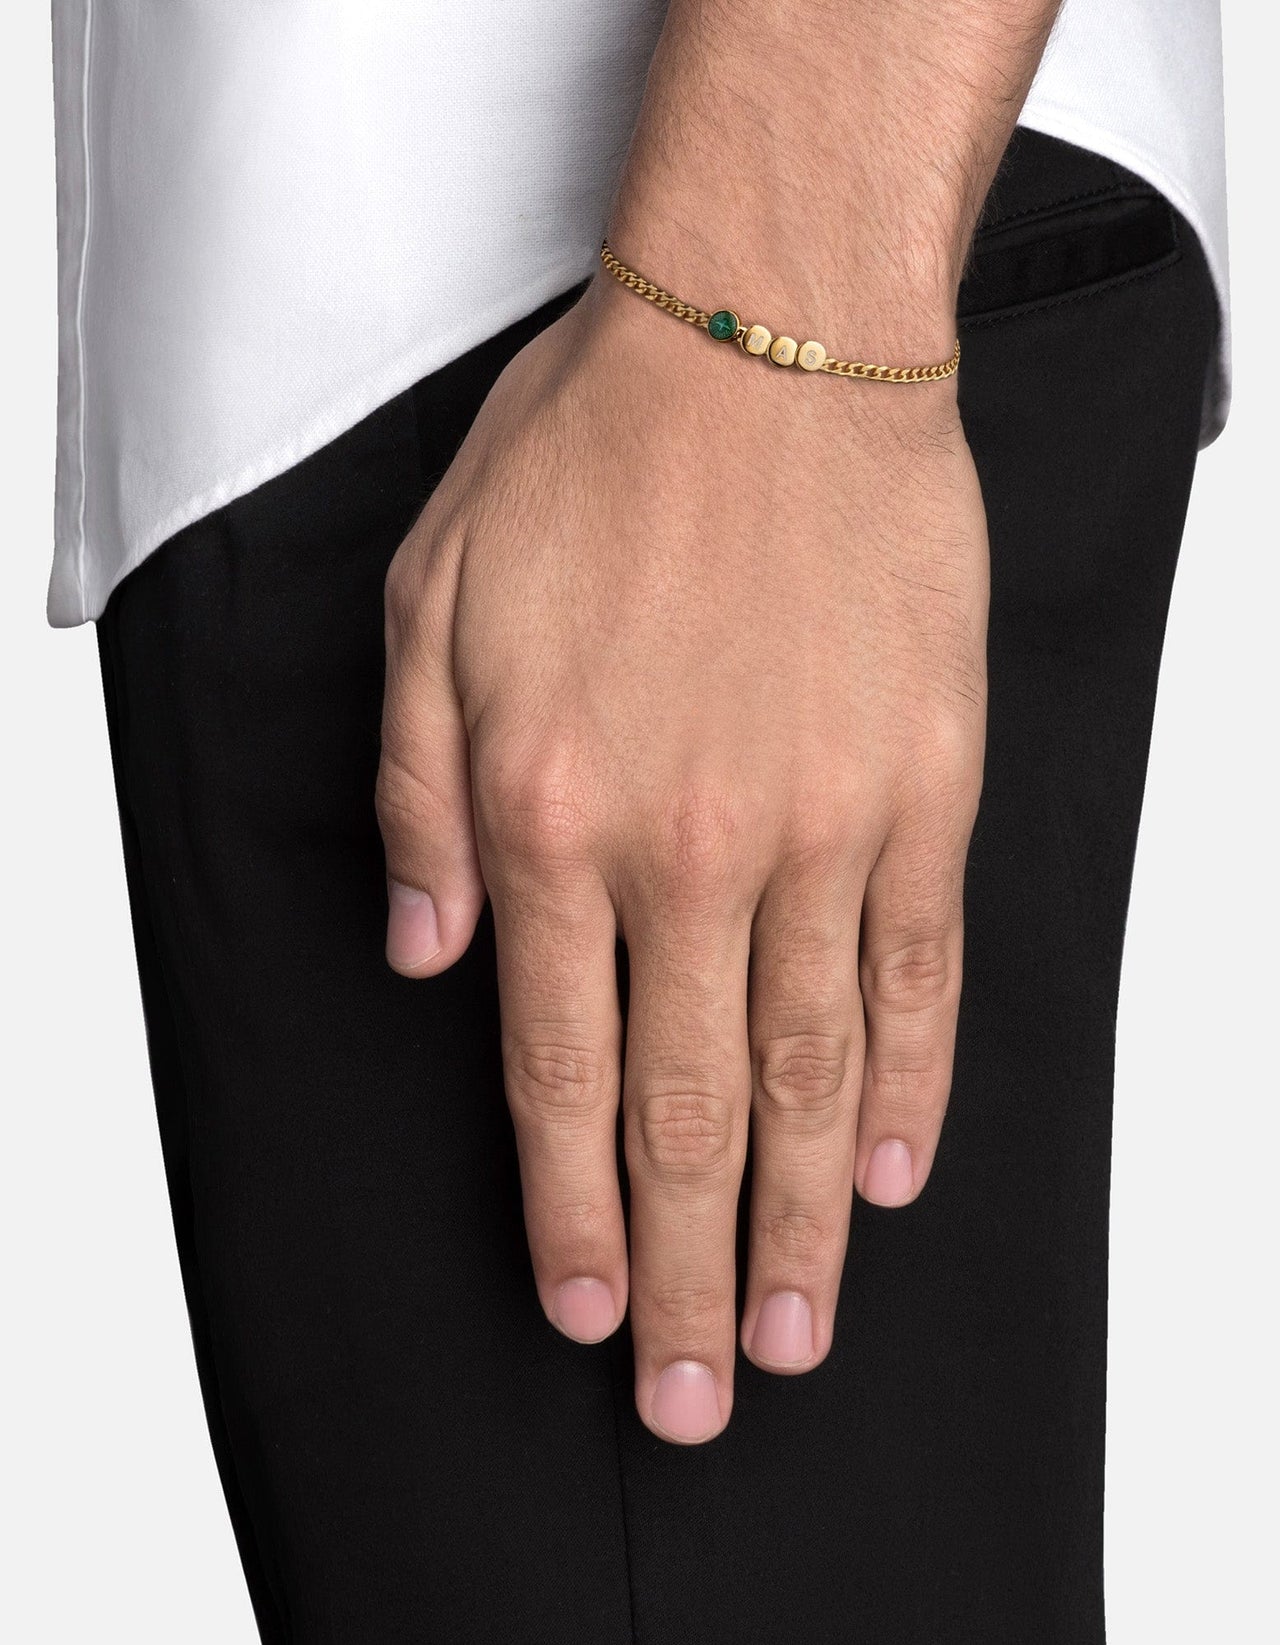 Buy One Gram Gold Ball Chain Design Guaranteed Thin Bracelet Buy Online